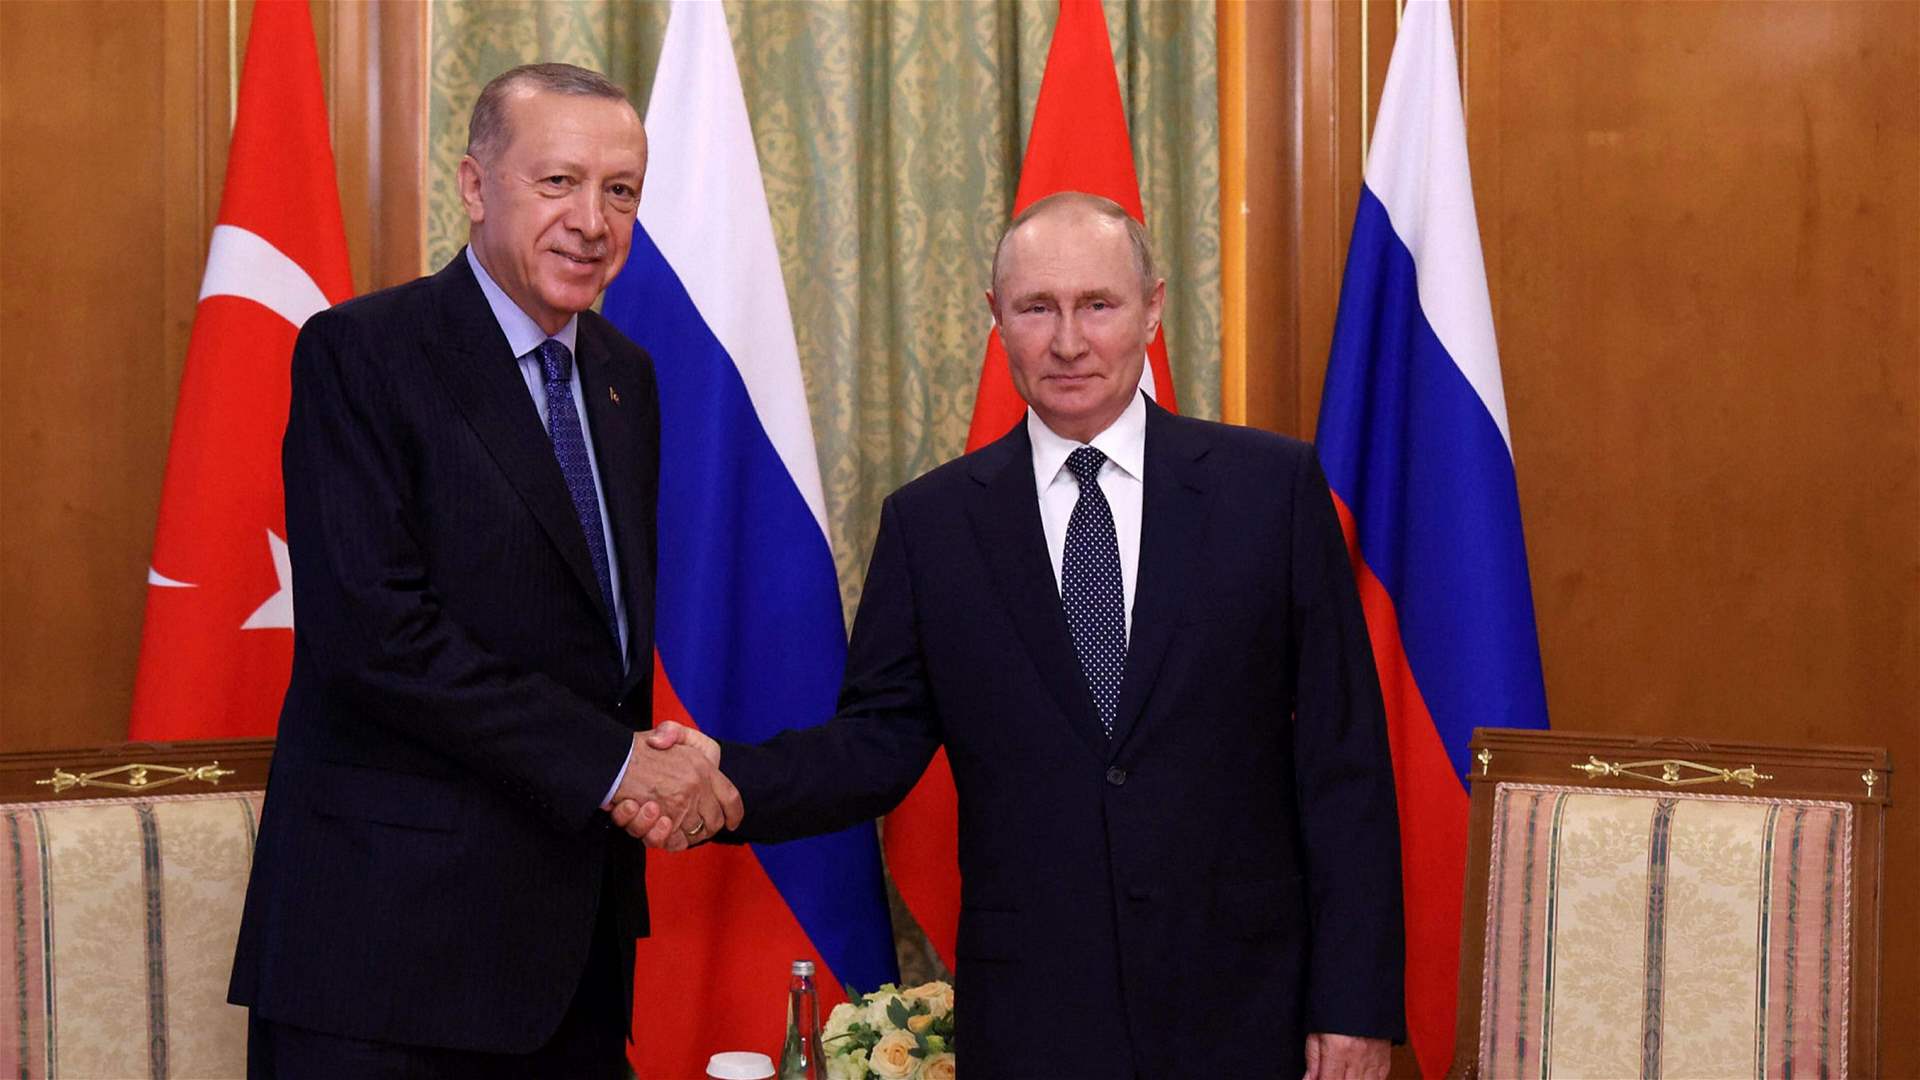 Erdogan says Putin may visit Turkey in April for power plant inauguration